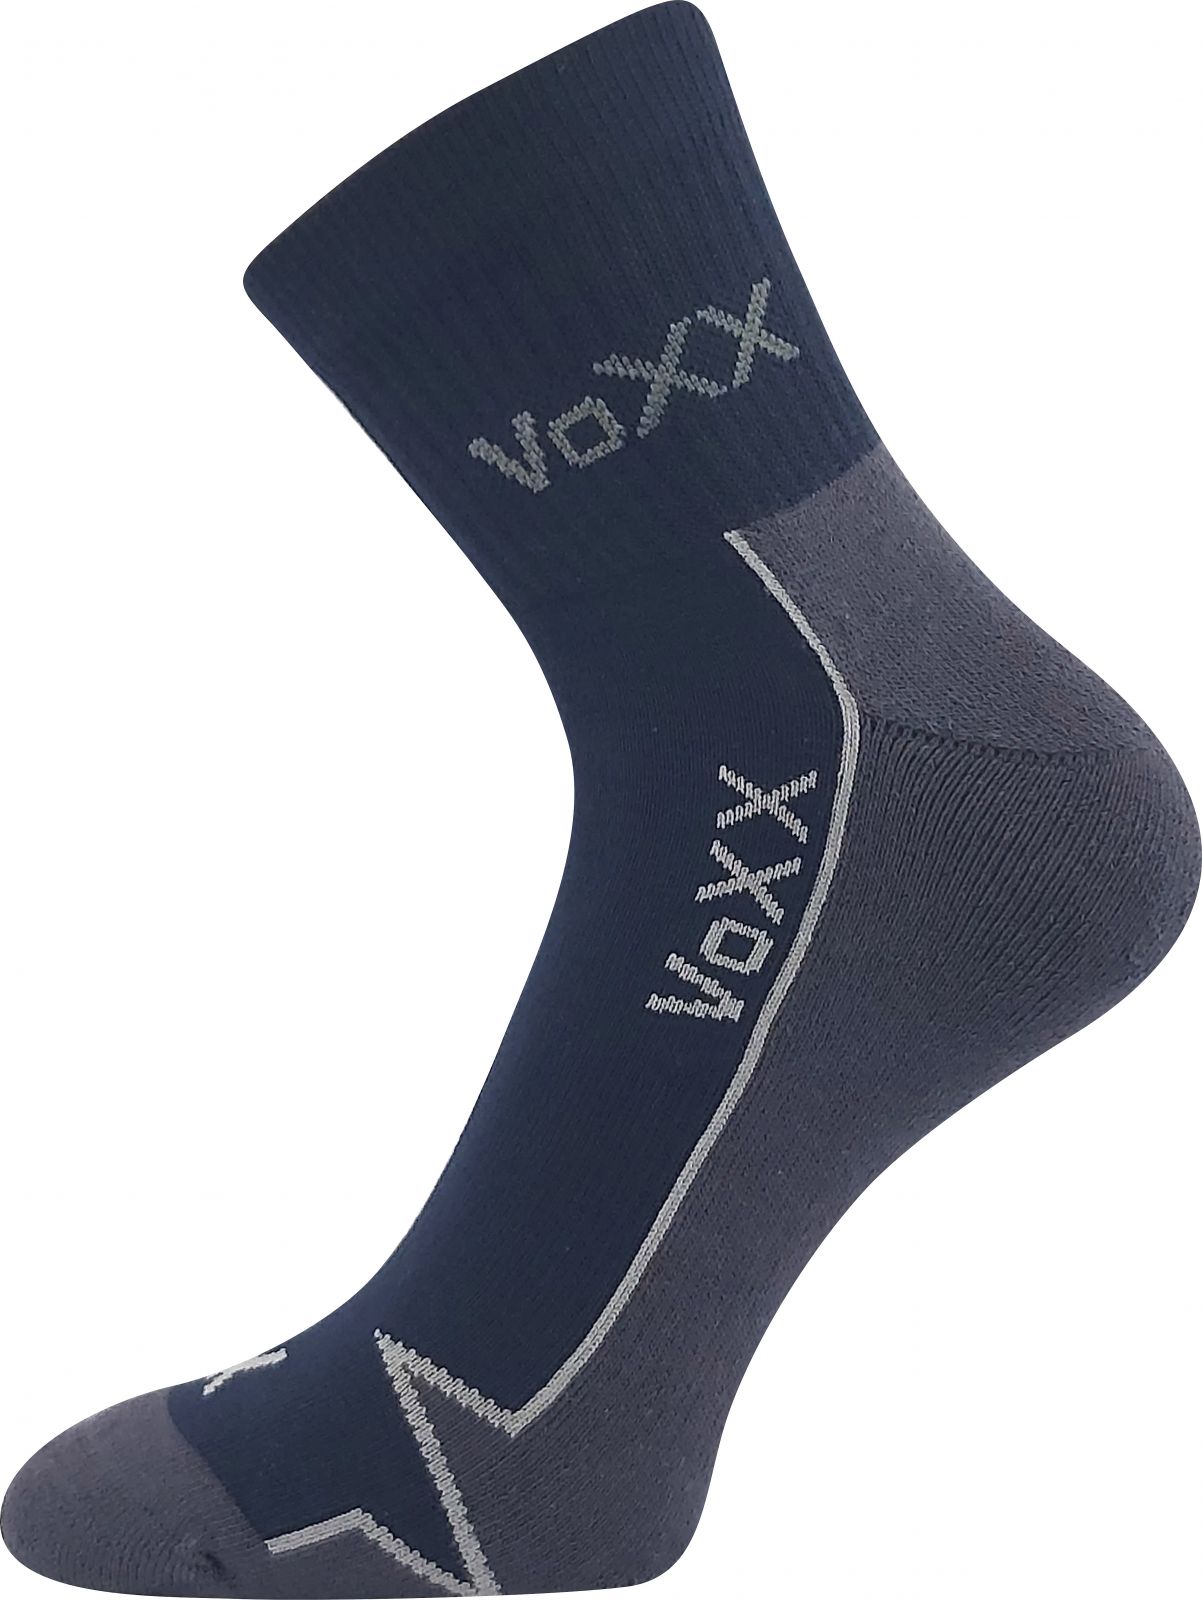 VoXX® ponožky Locator B tmavě modrá